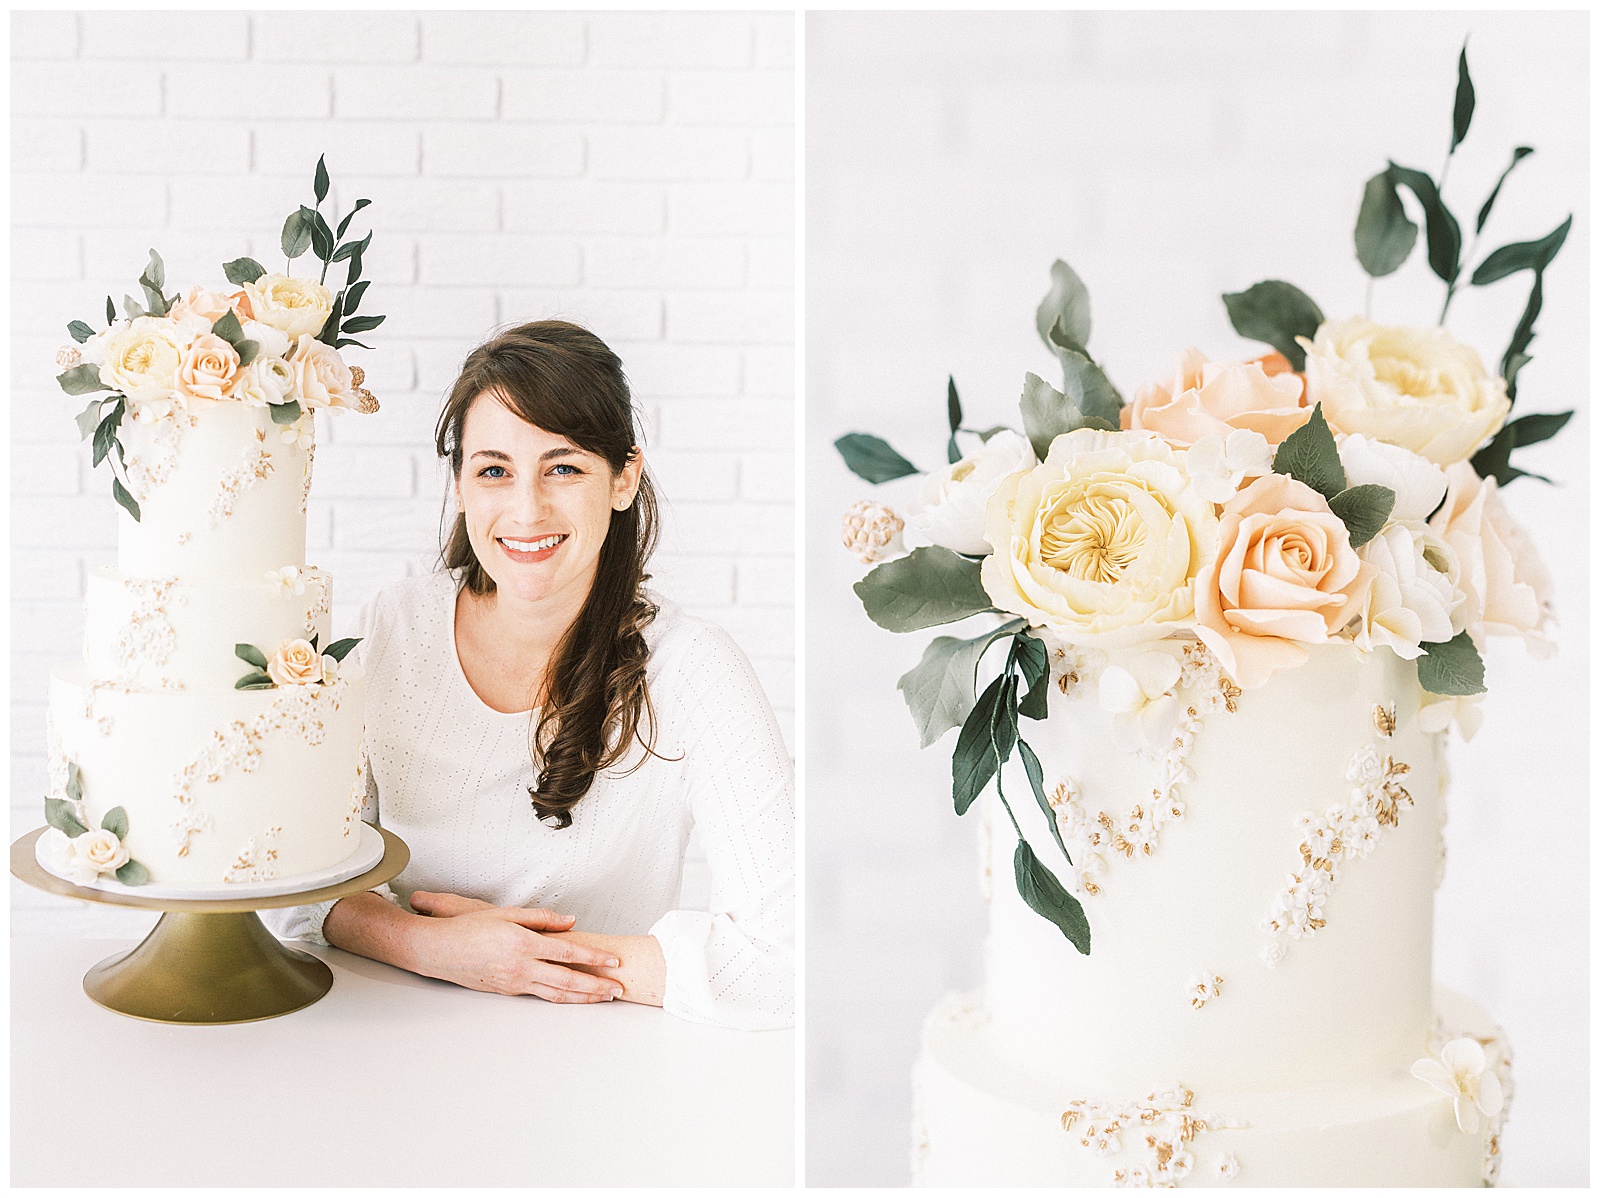 Charlotte NC Wedding Cake Designer Aryn Keogh at Delish Cakery Making Sugar Flowers